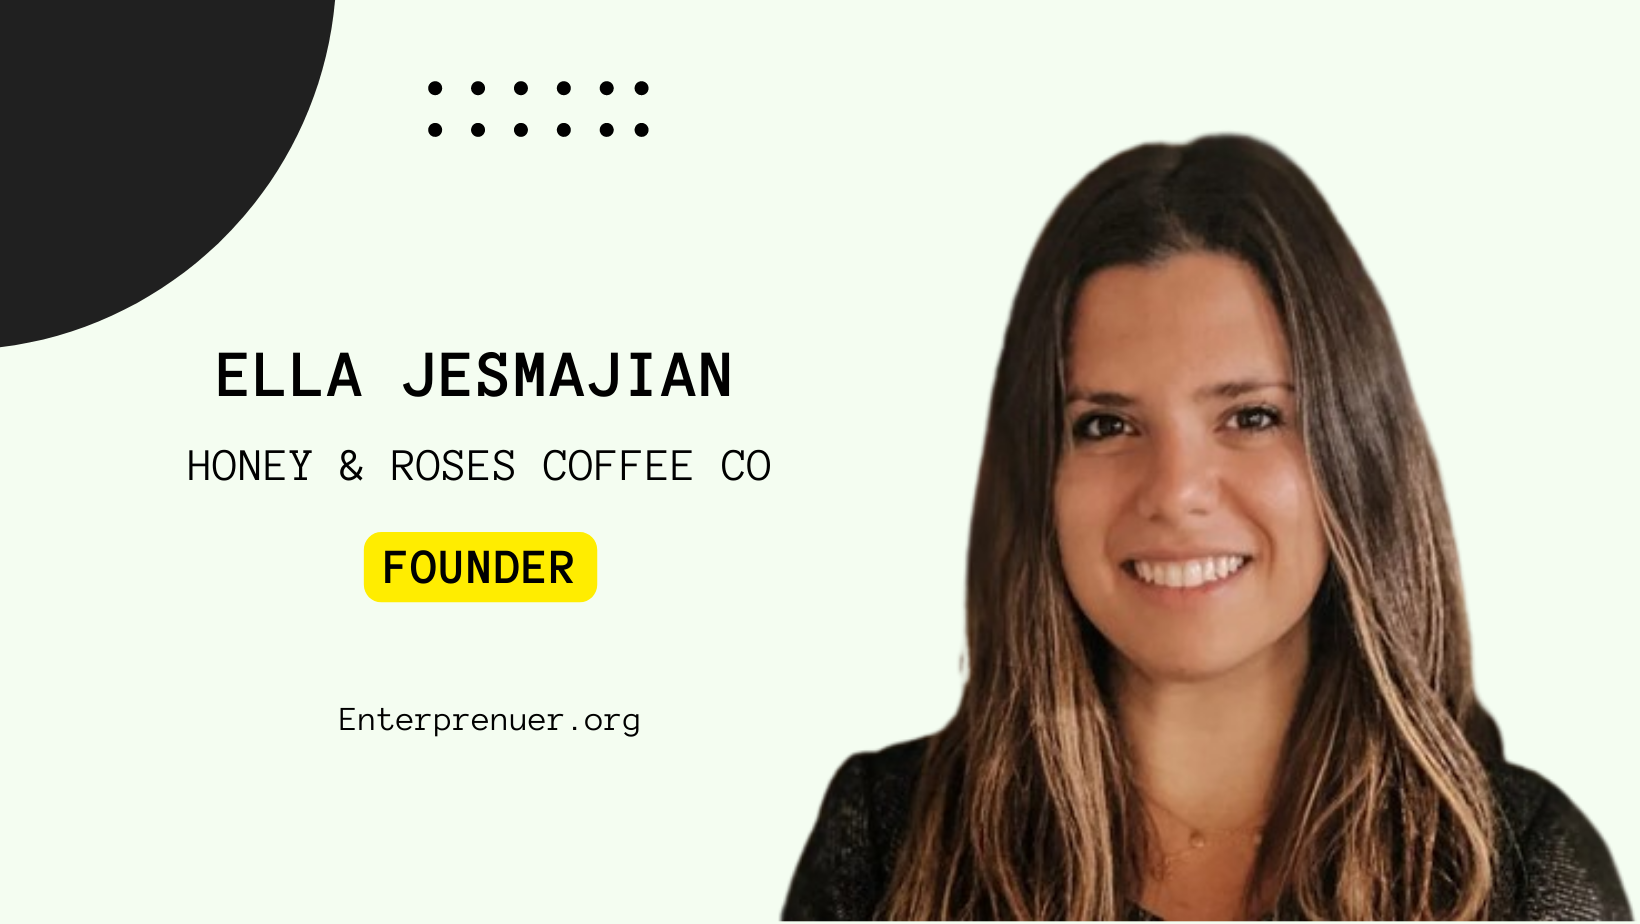 Meet Ella Jesmajian Co-Founder of Honey & Roses Coffee Co.